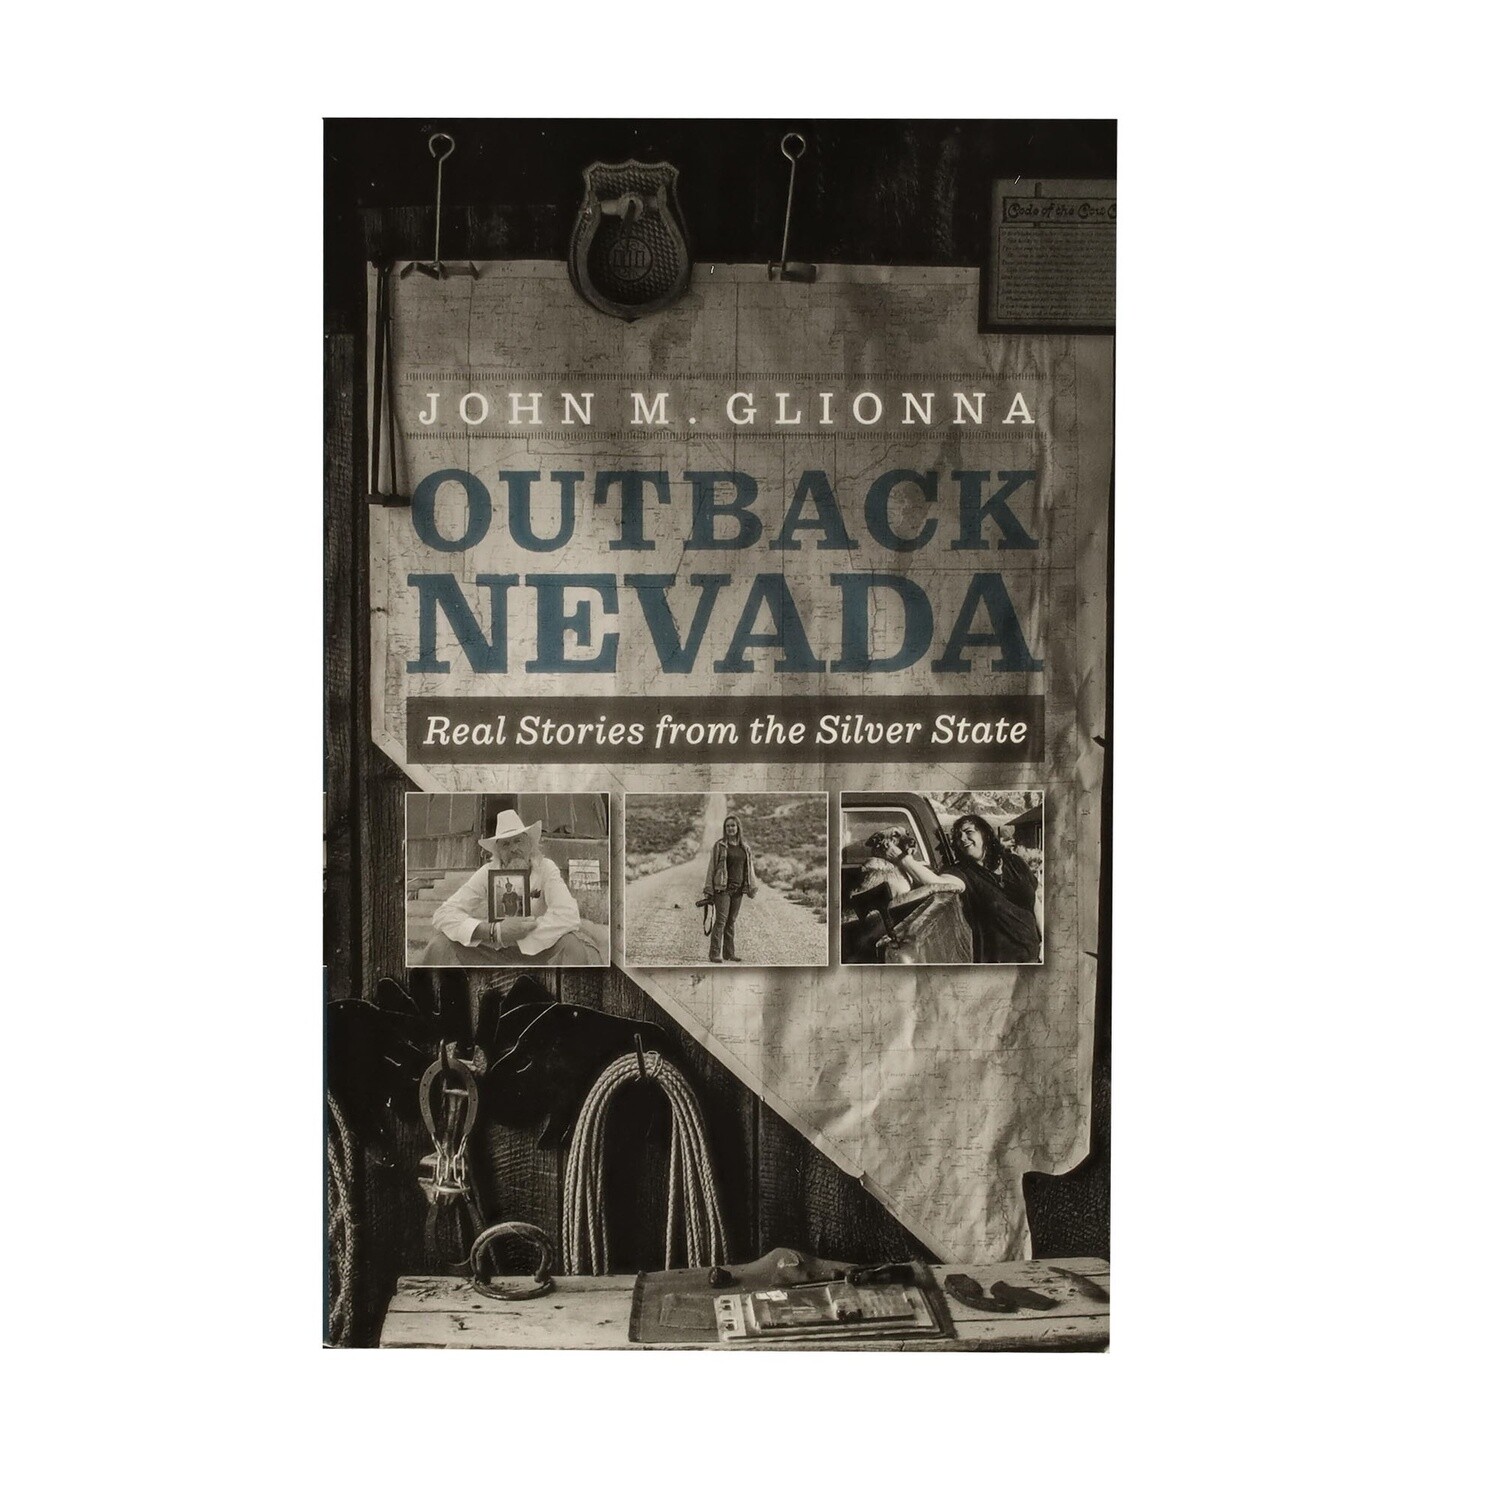 Outback Nevada by John M. Glionna